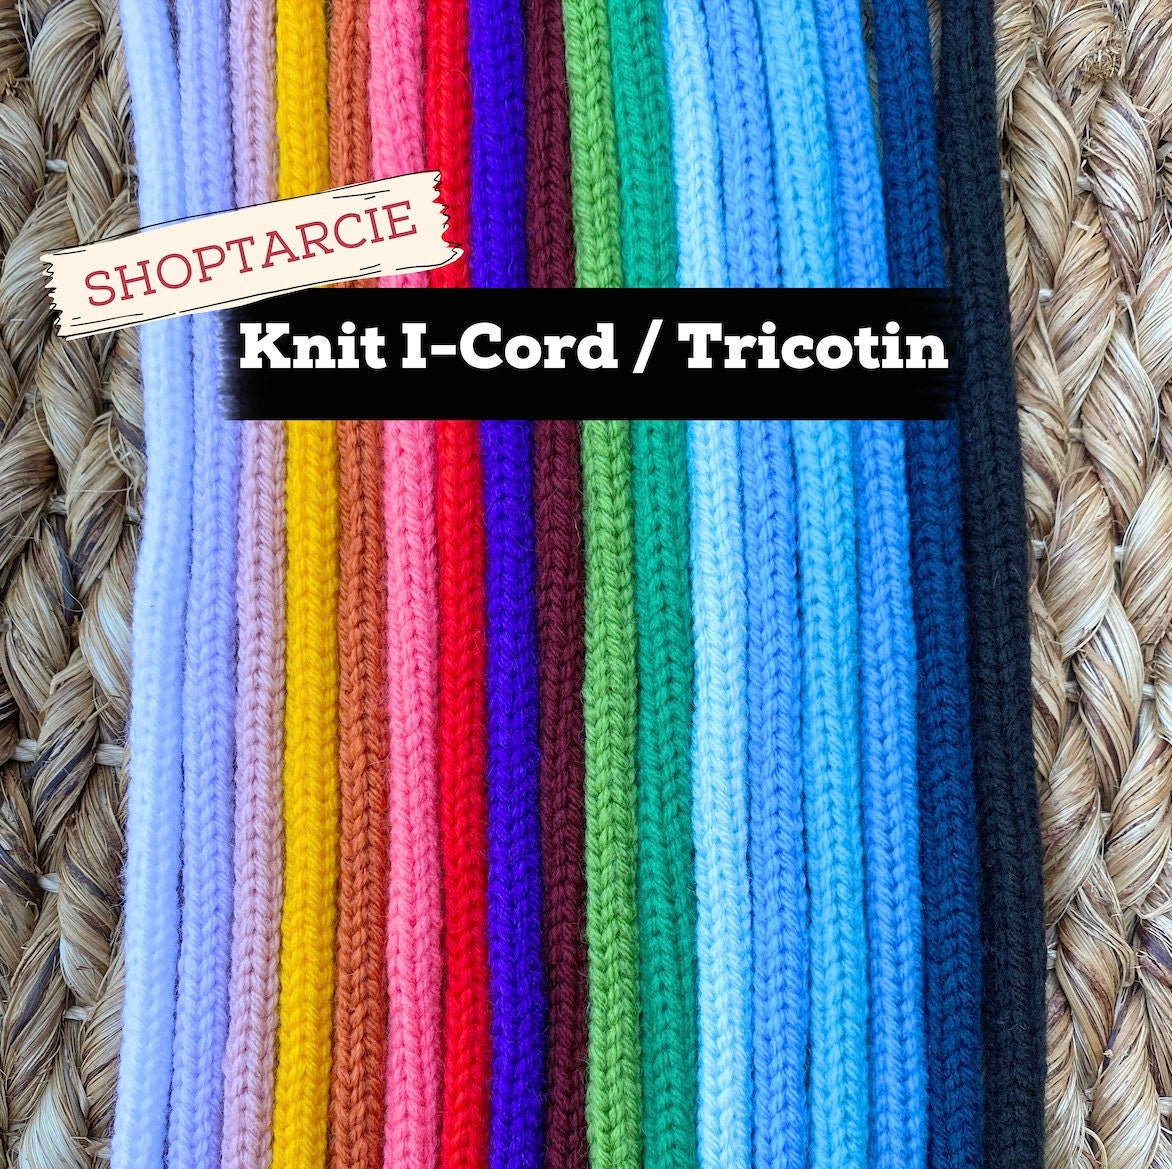 Single One Head Cord Rope String Knitting Machine - China Knitting